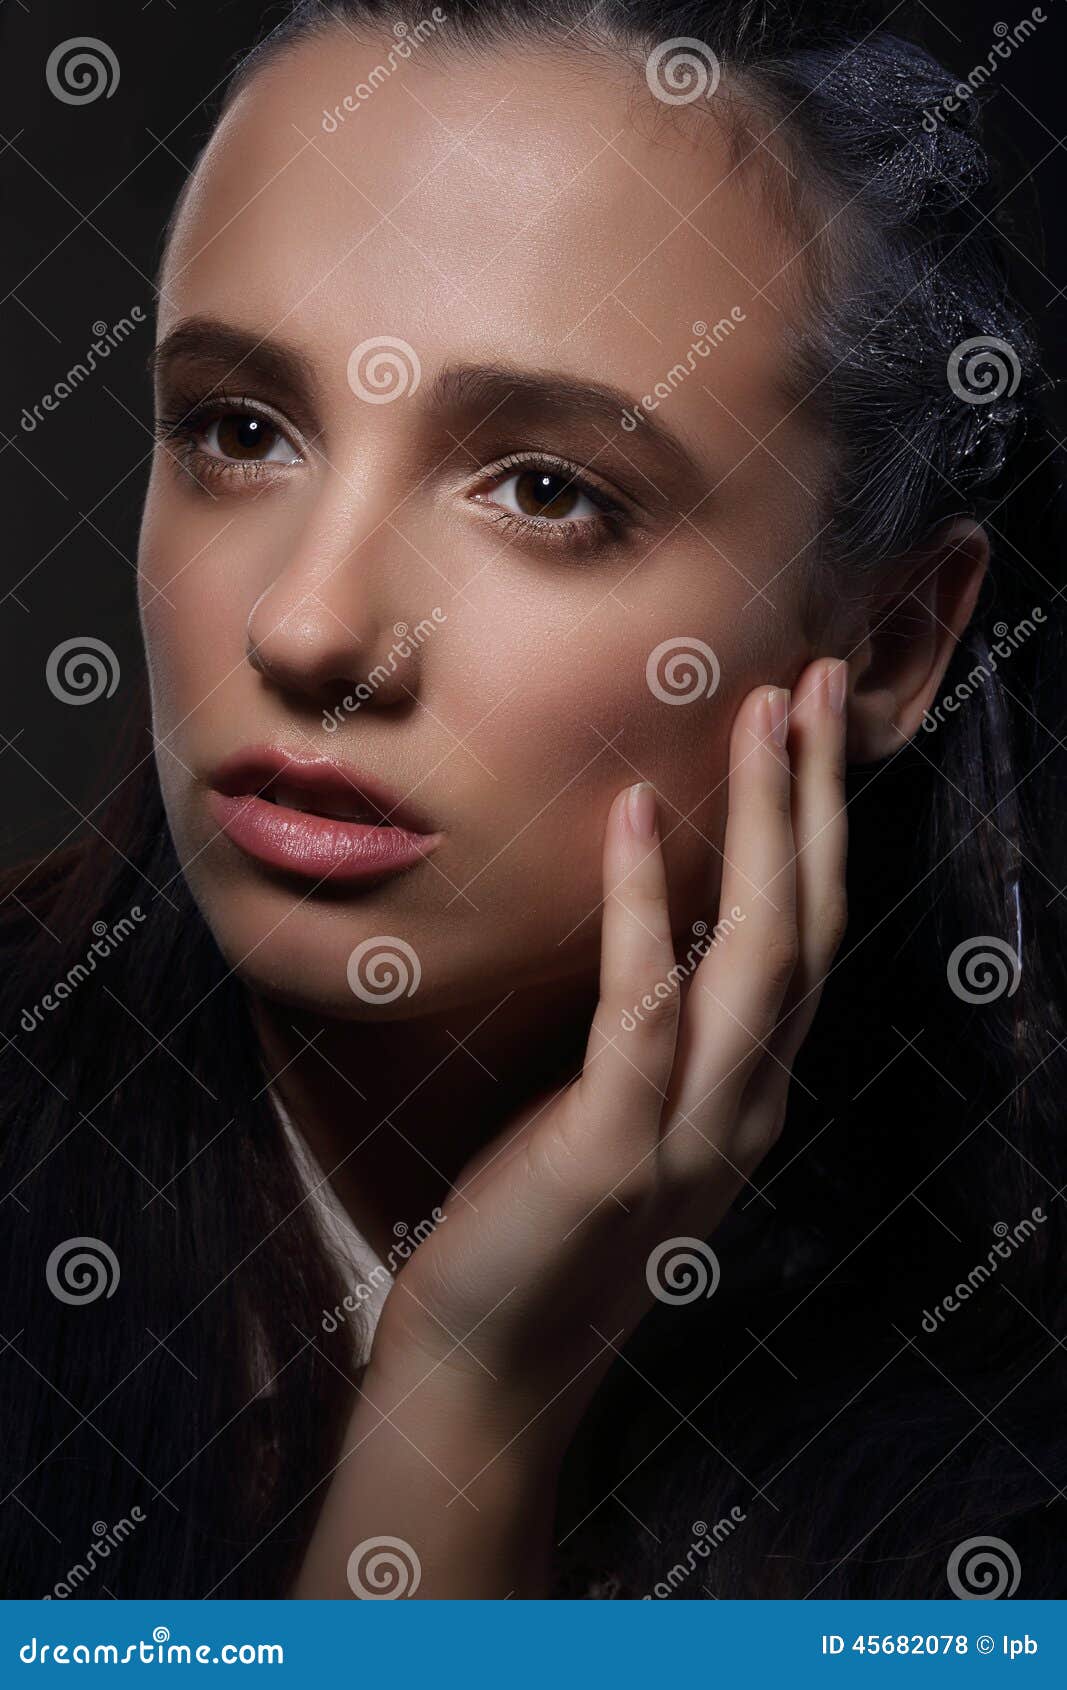 face of meditative pensive woman in dreams